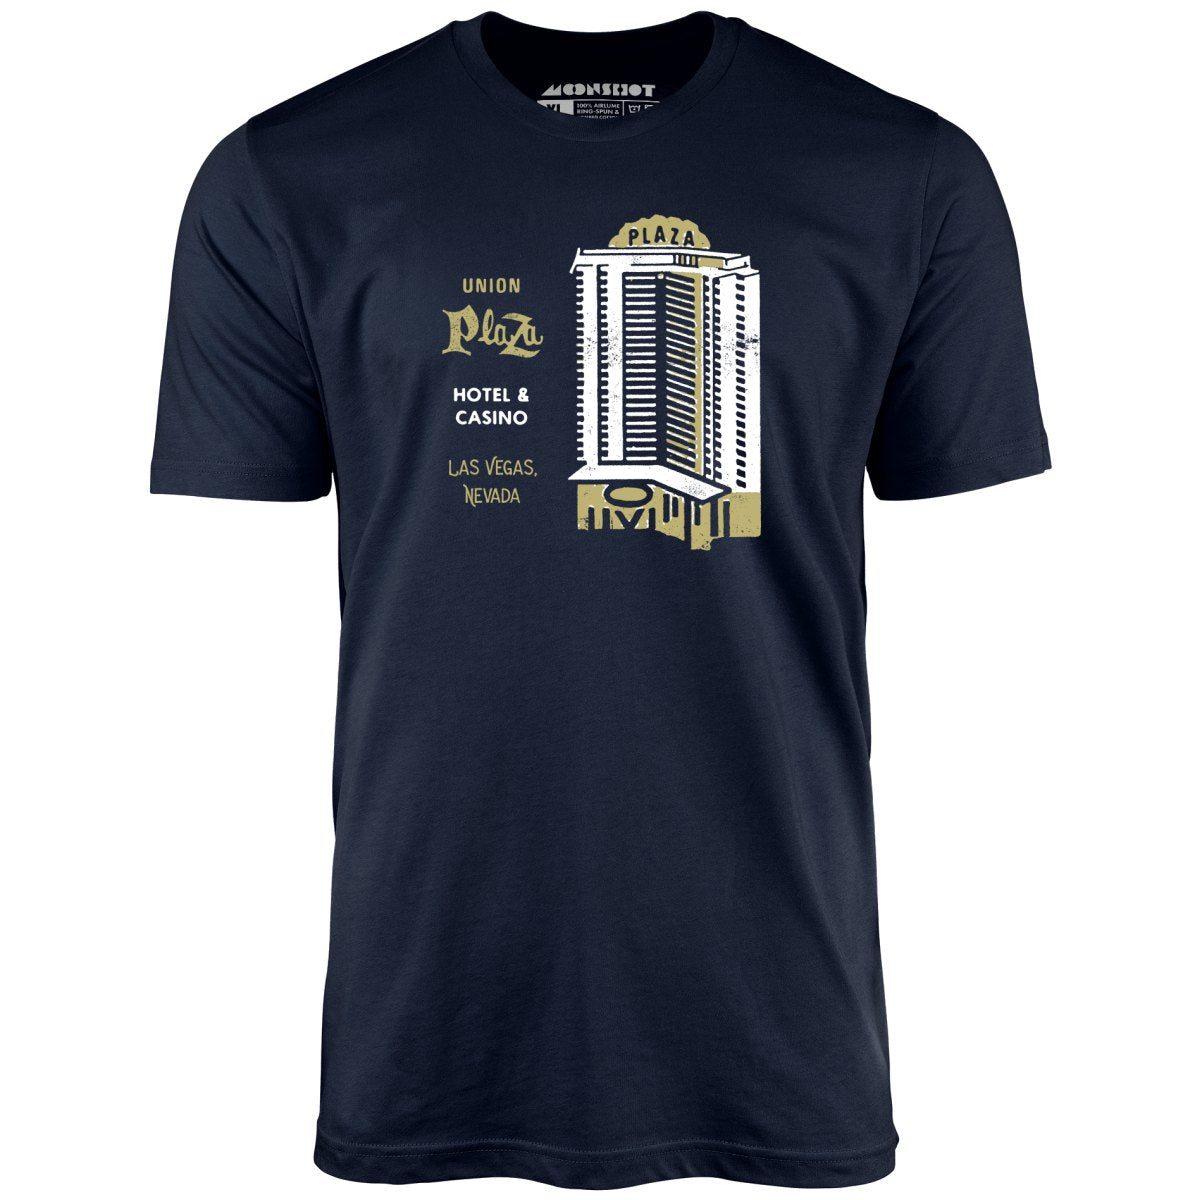 Union Plaza Hotel & Casino v2 - Vintage Las Vegas - Unisex T-Shirt